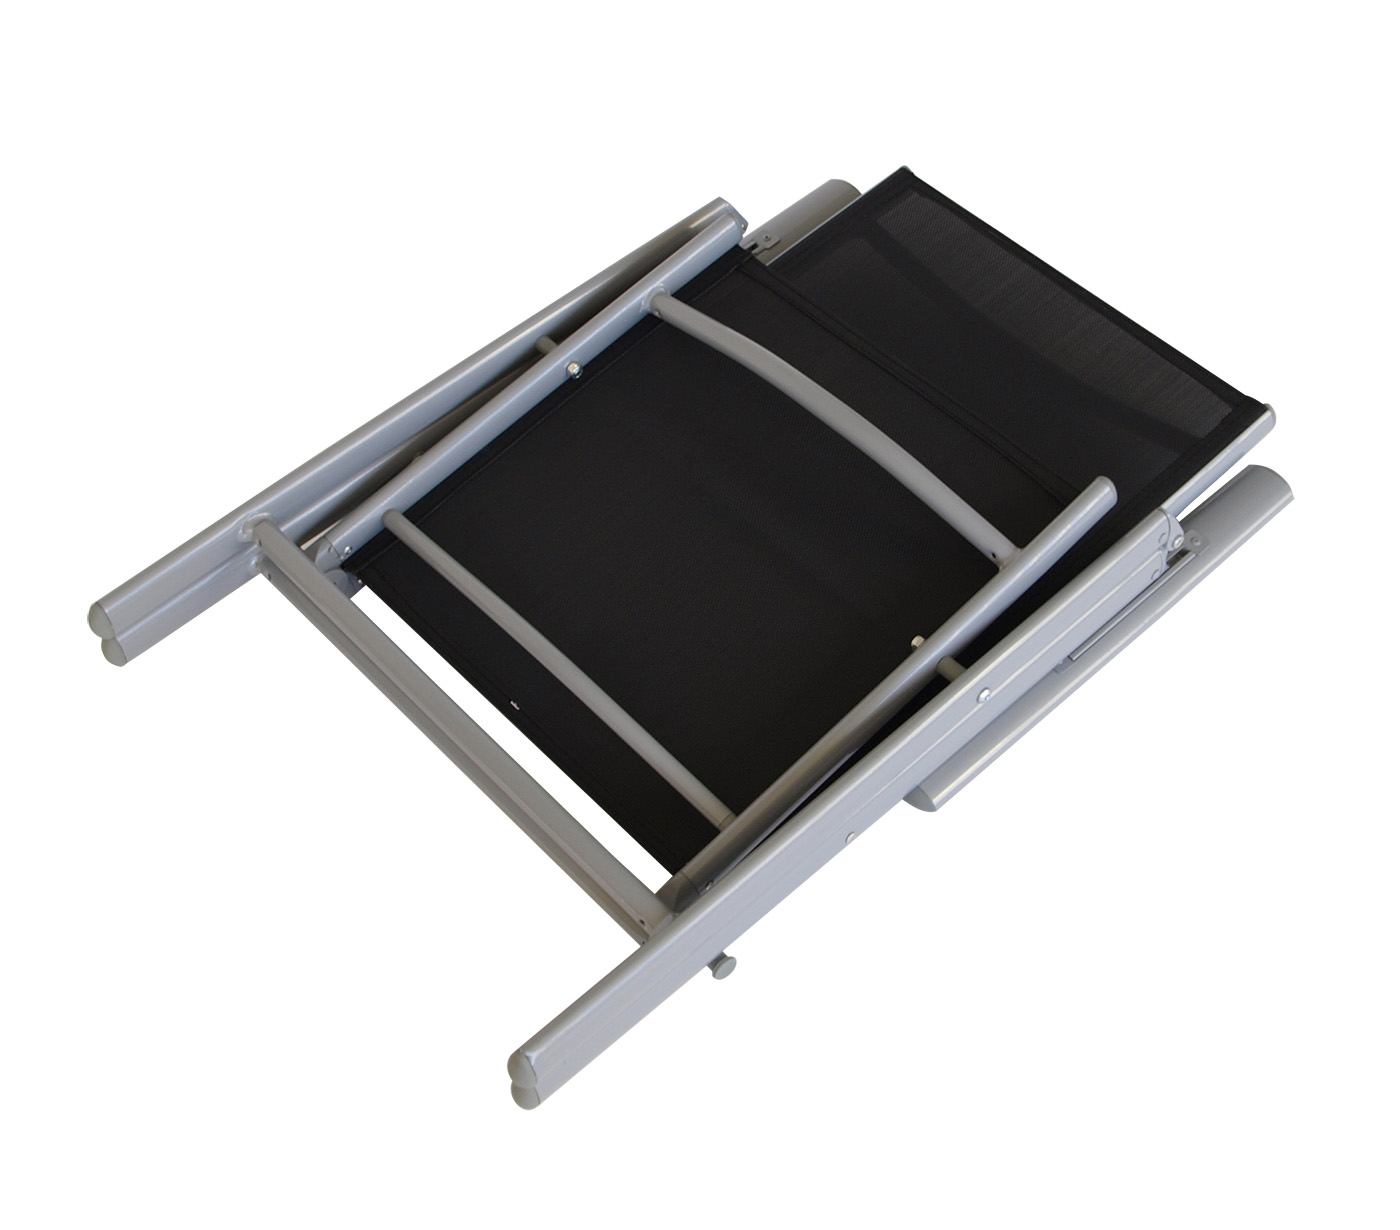 Garnitur SORANO 5-teilig, Alu + Kunstholz + Kunstgewebe schwarz, mit Tisch 70x125cm